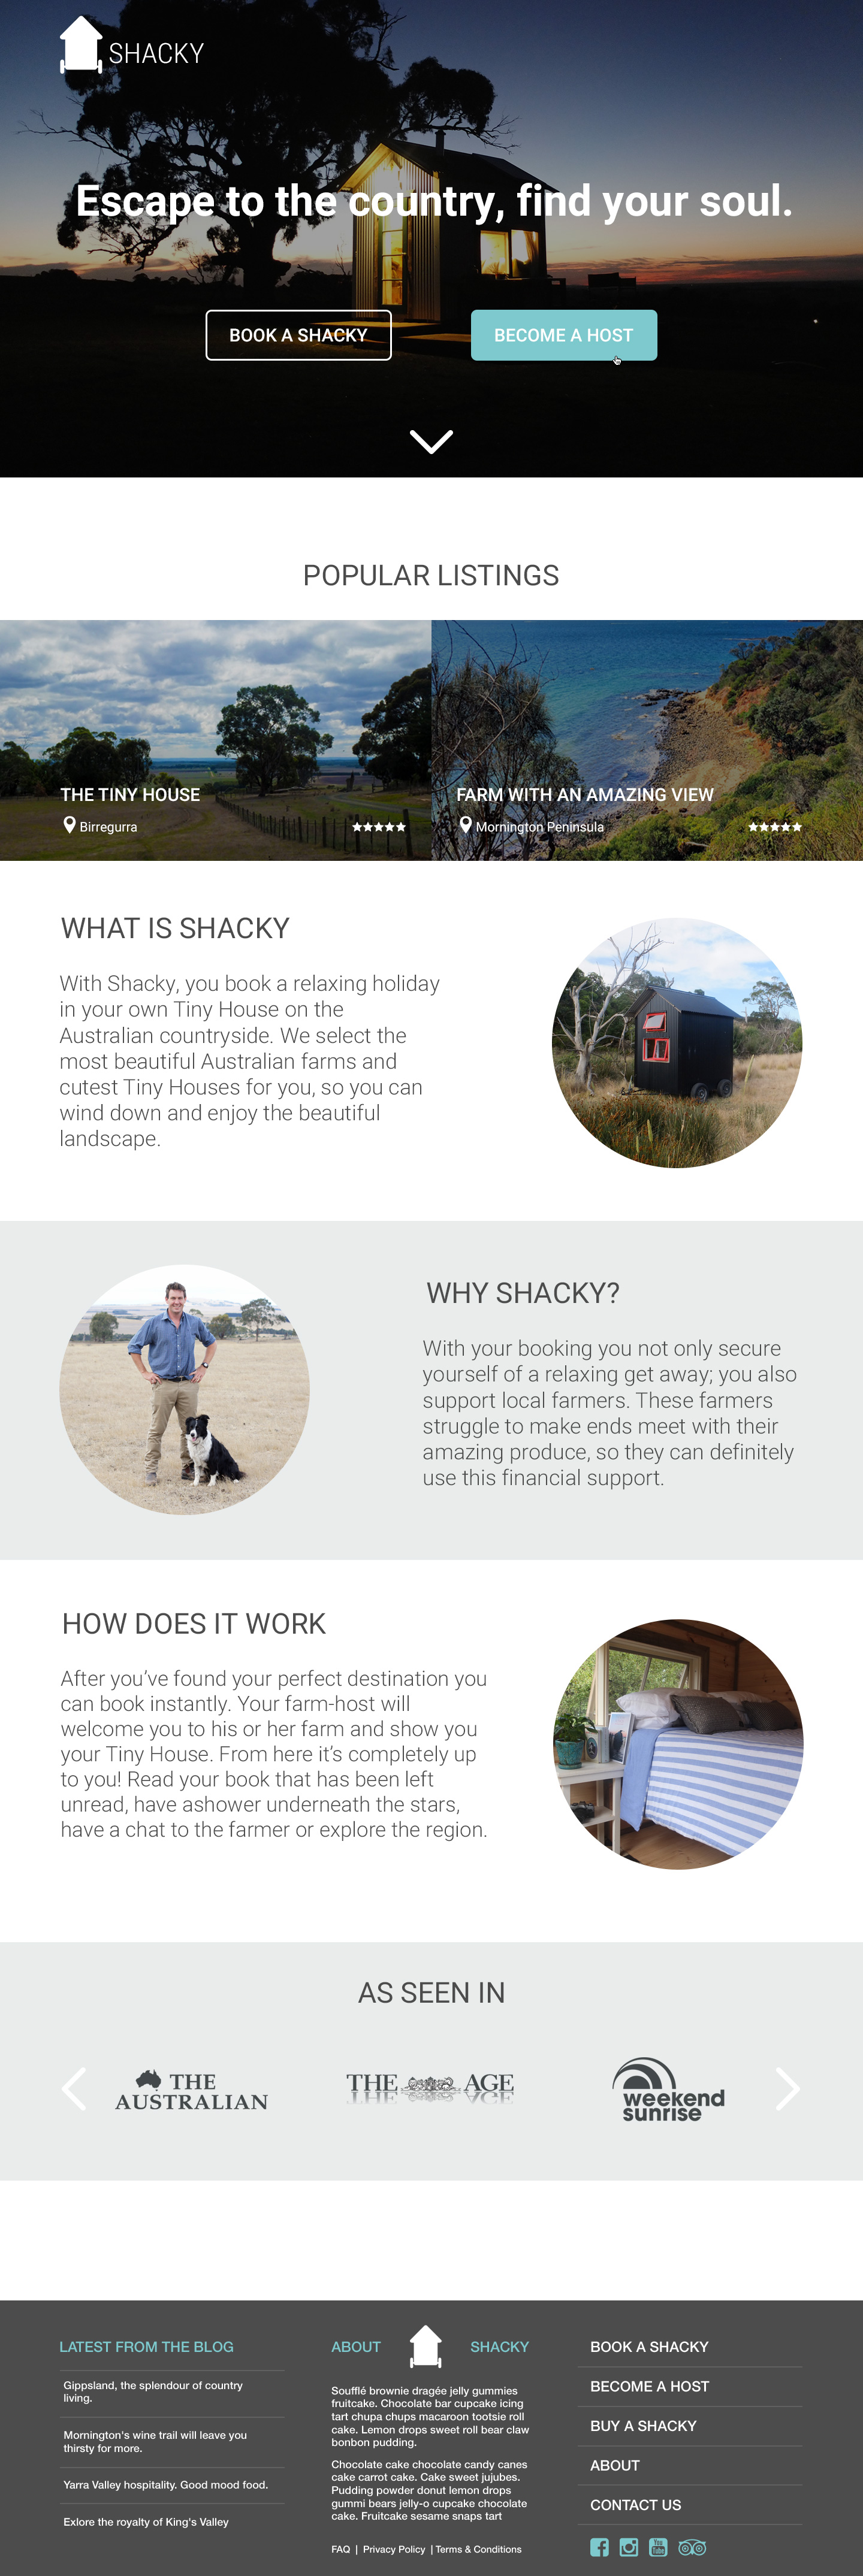 shacky-homepage